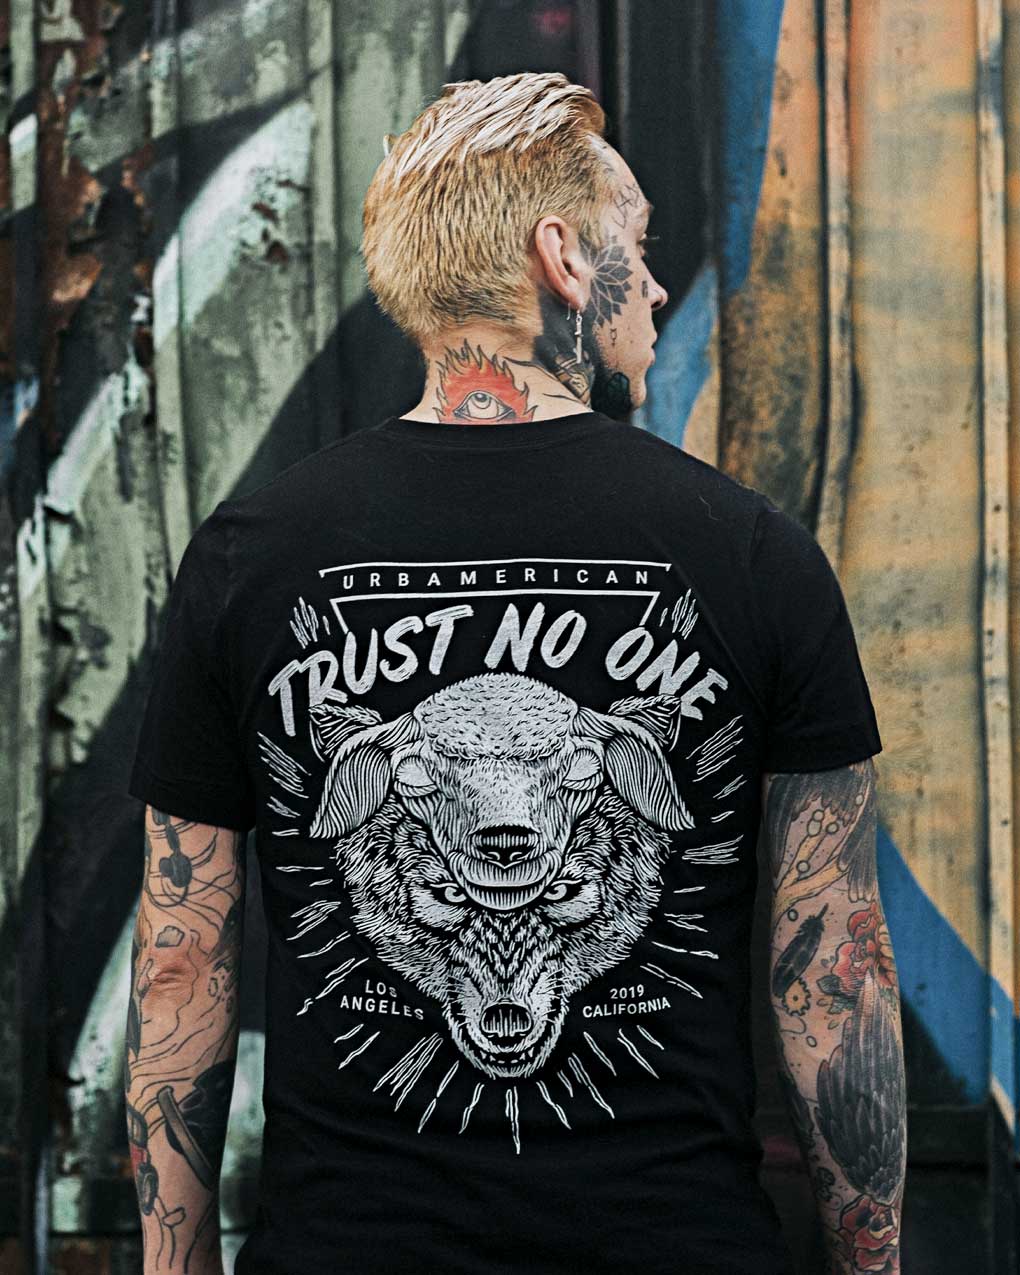 One | Trust T-Shirt No Urbamerican